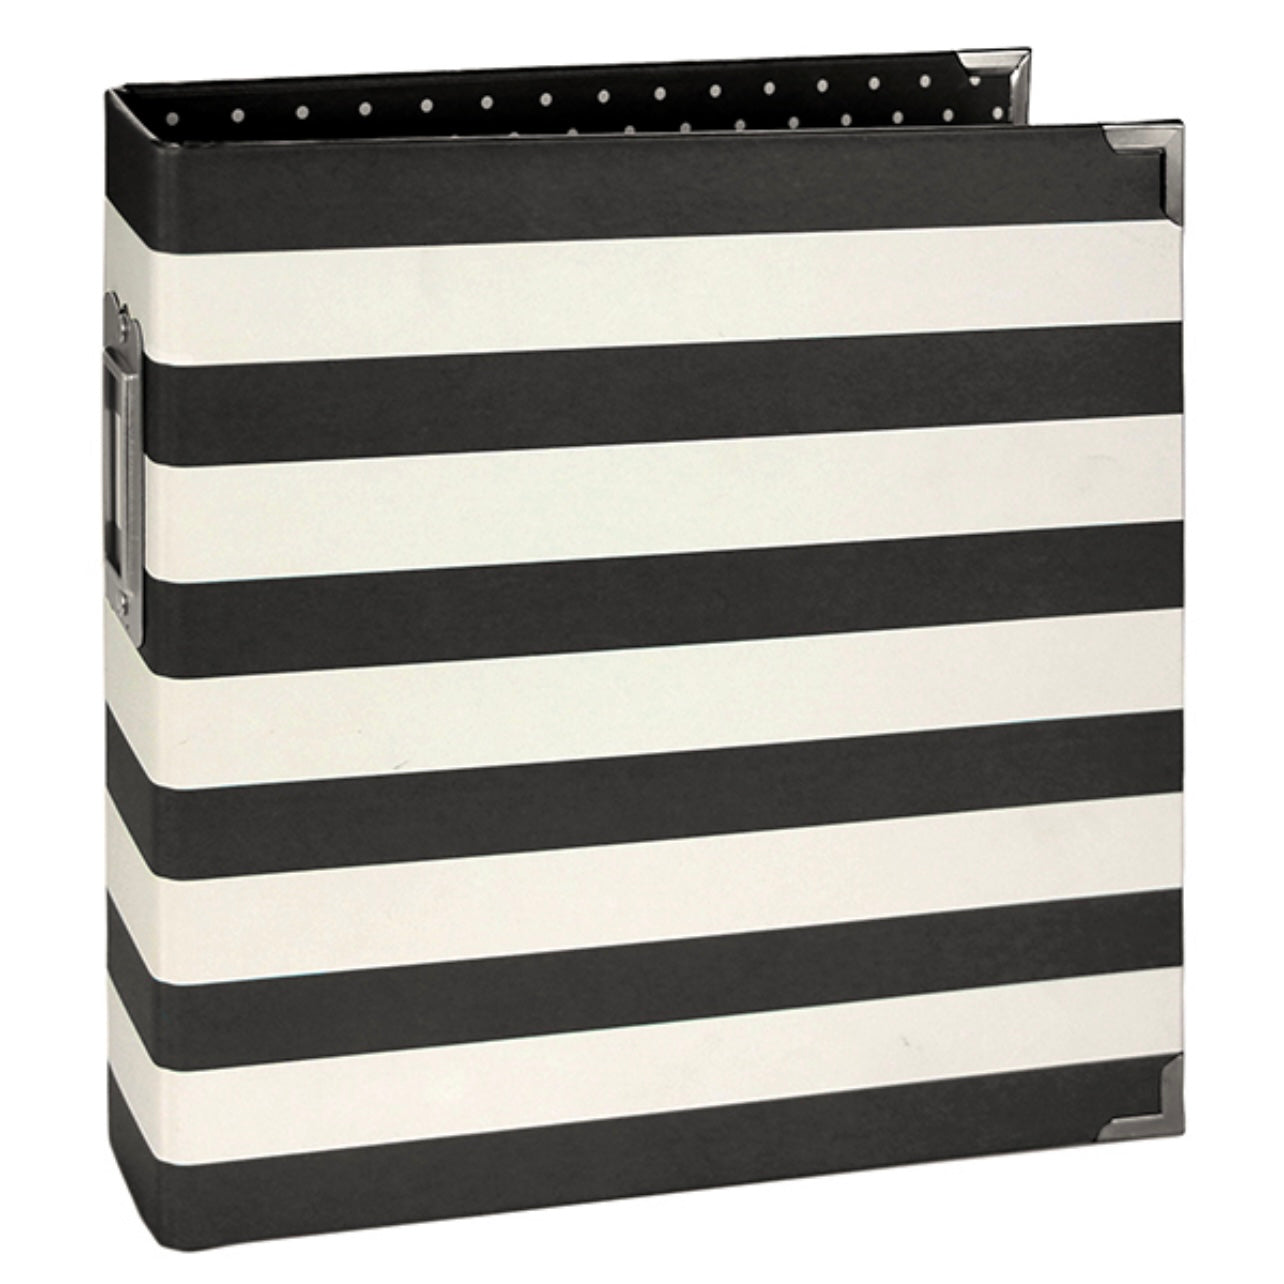 6 x 8” SNAP Album - Black Stripe